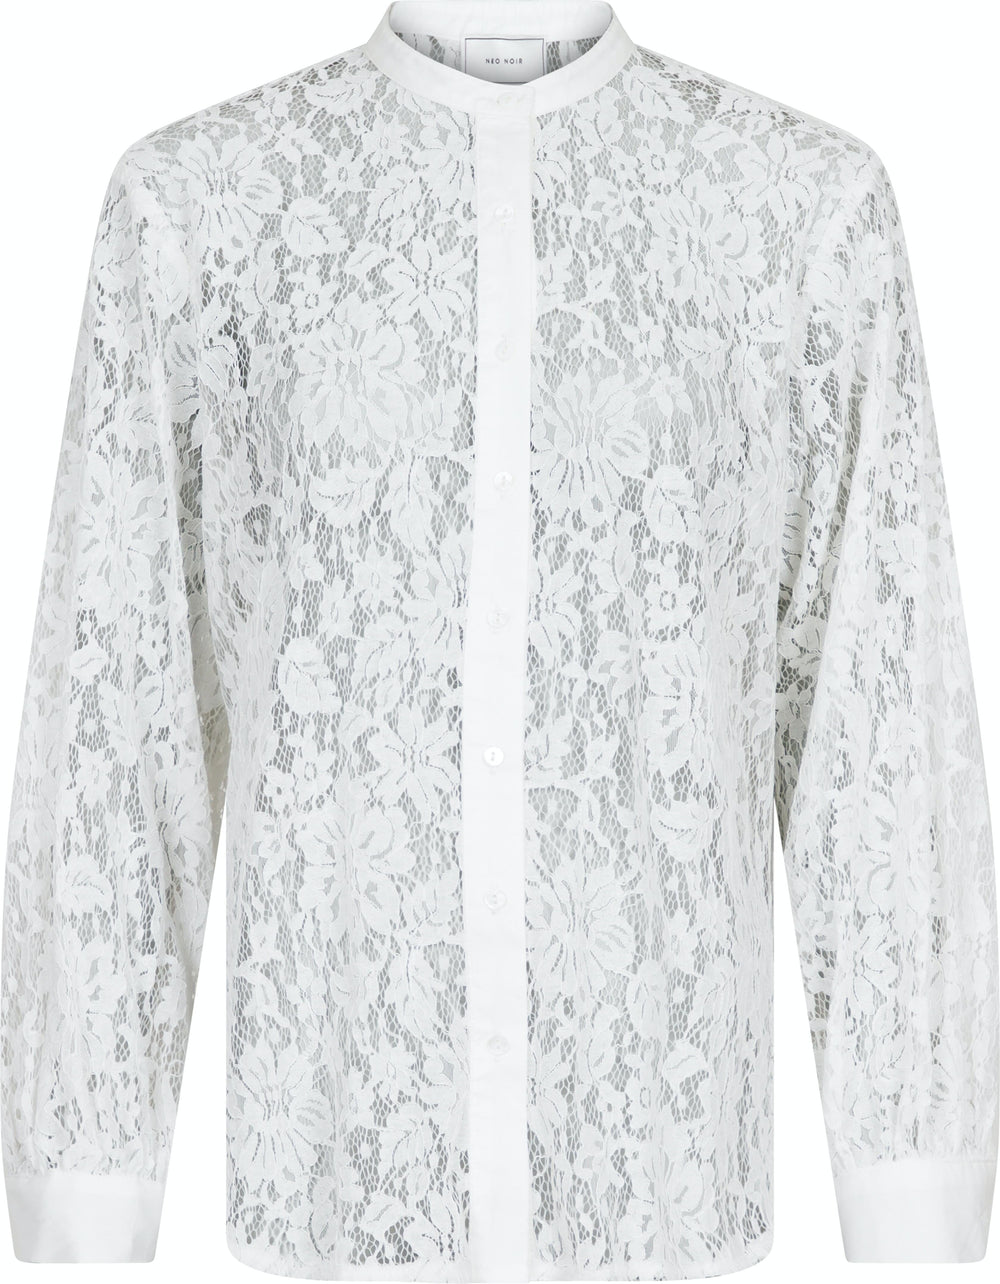 Neo Noir - Mae Lace Shirt - White